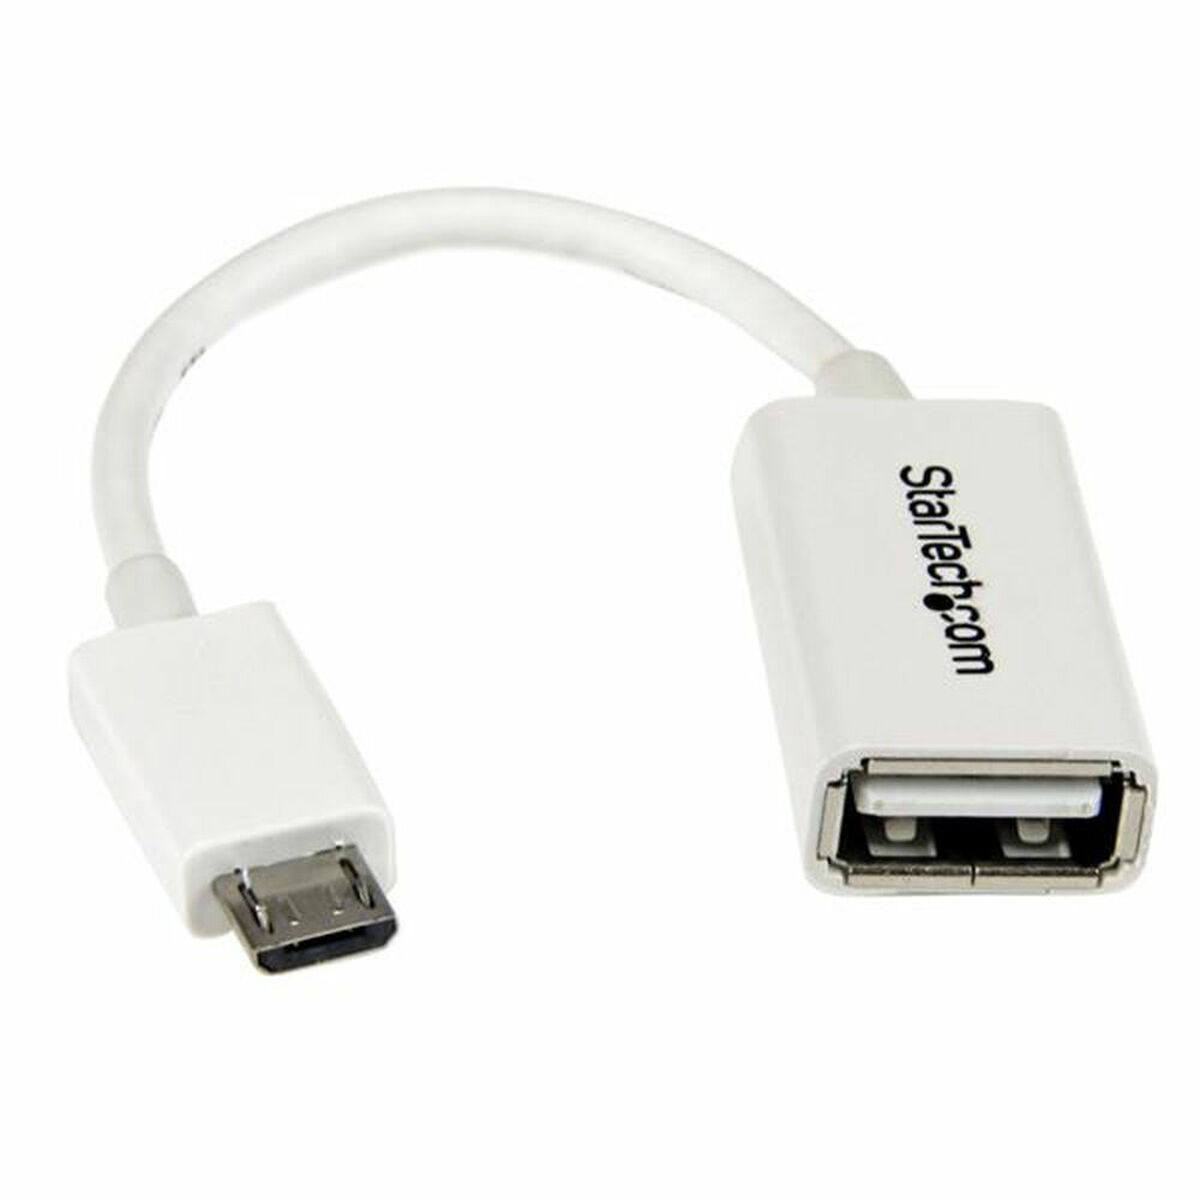 Kabel MicroUSB naar USB Startech UUSBOTGW             Wit